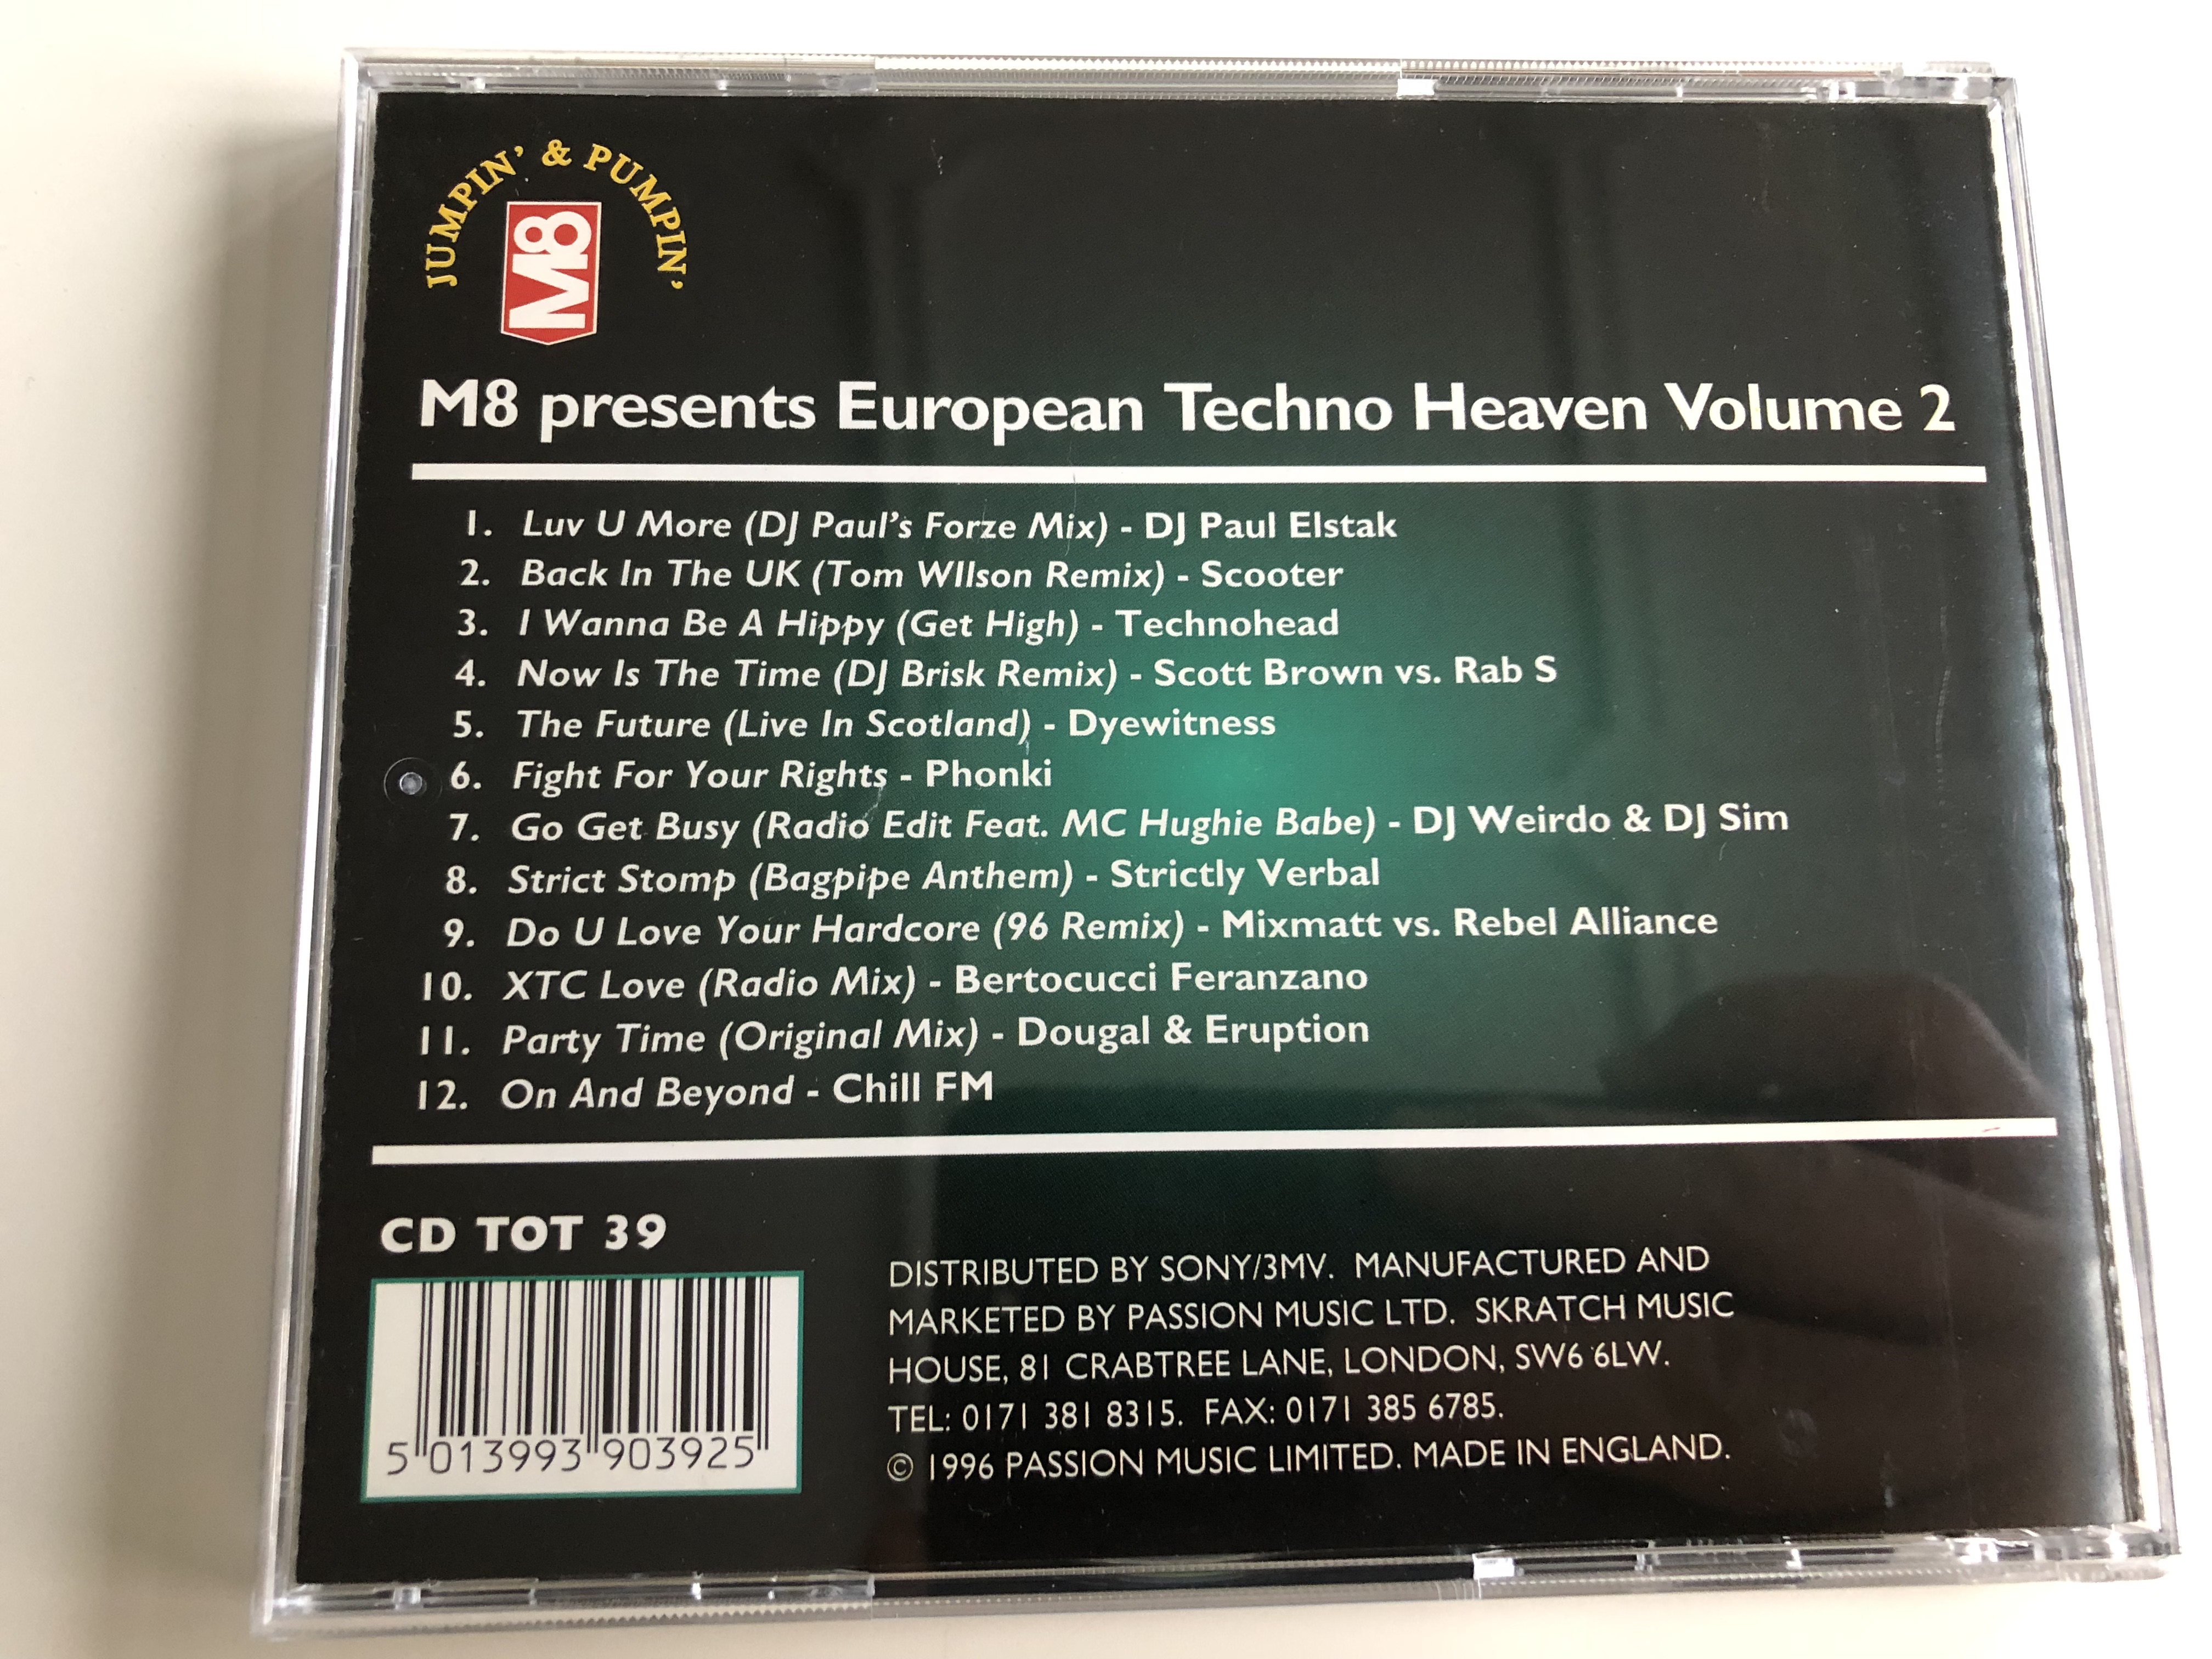 m8-presents-european-techno-heaven-vol.-2-jumpin-pumpin-dj-paul-elstak-scooter-phonki-technohead-scott-brown-vs-rab-s.-audio-cd-1996-cd-tot-39-4-.jpg